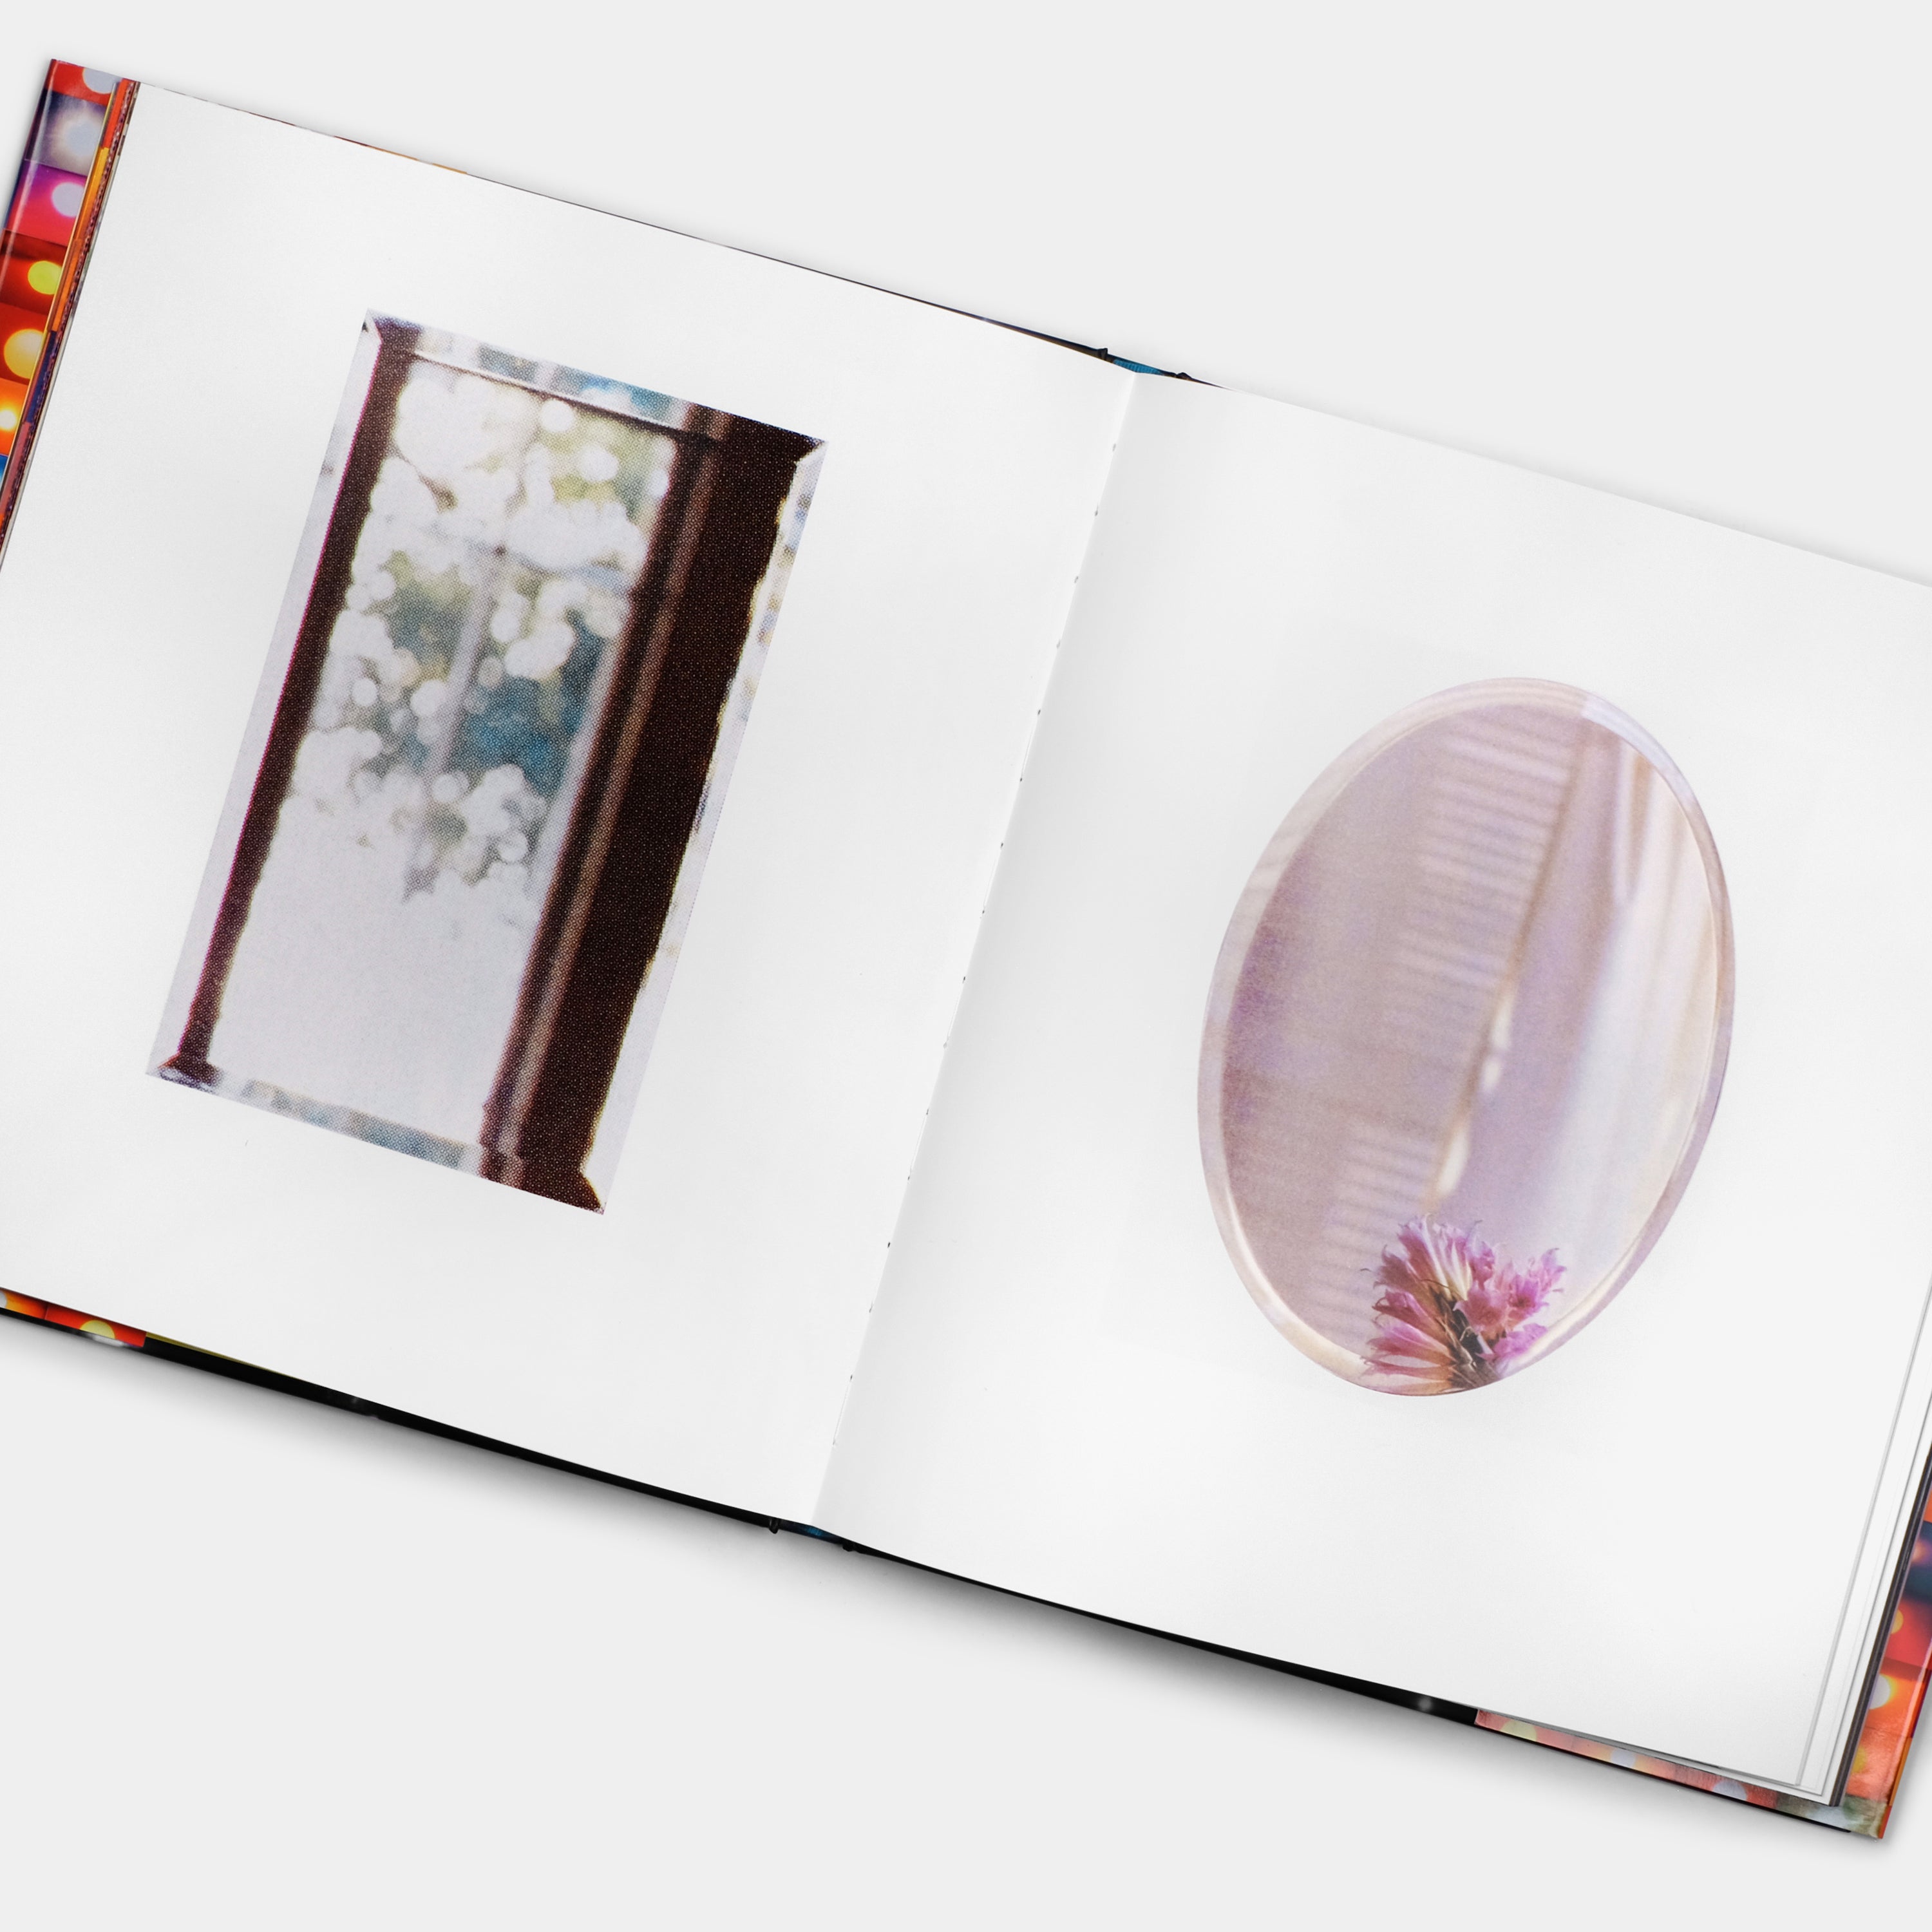 Penelope Umbrico: Photographs Book